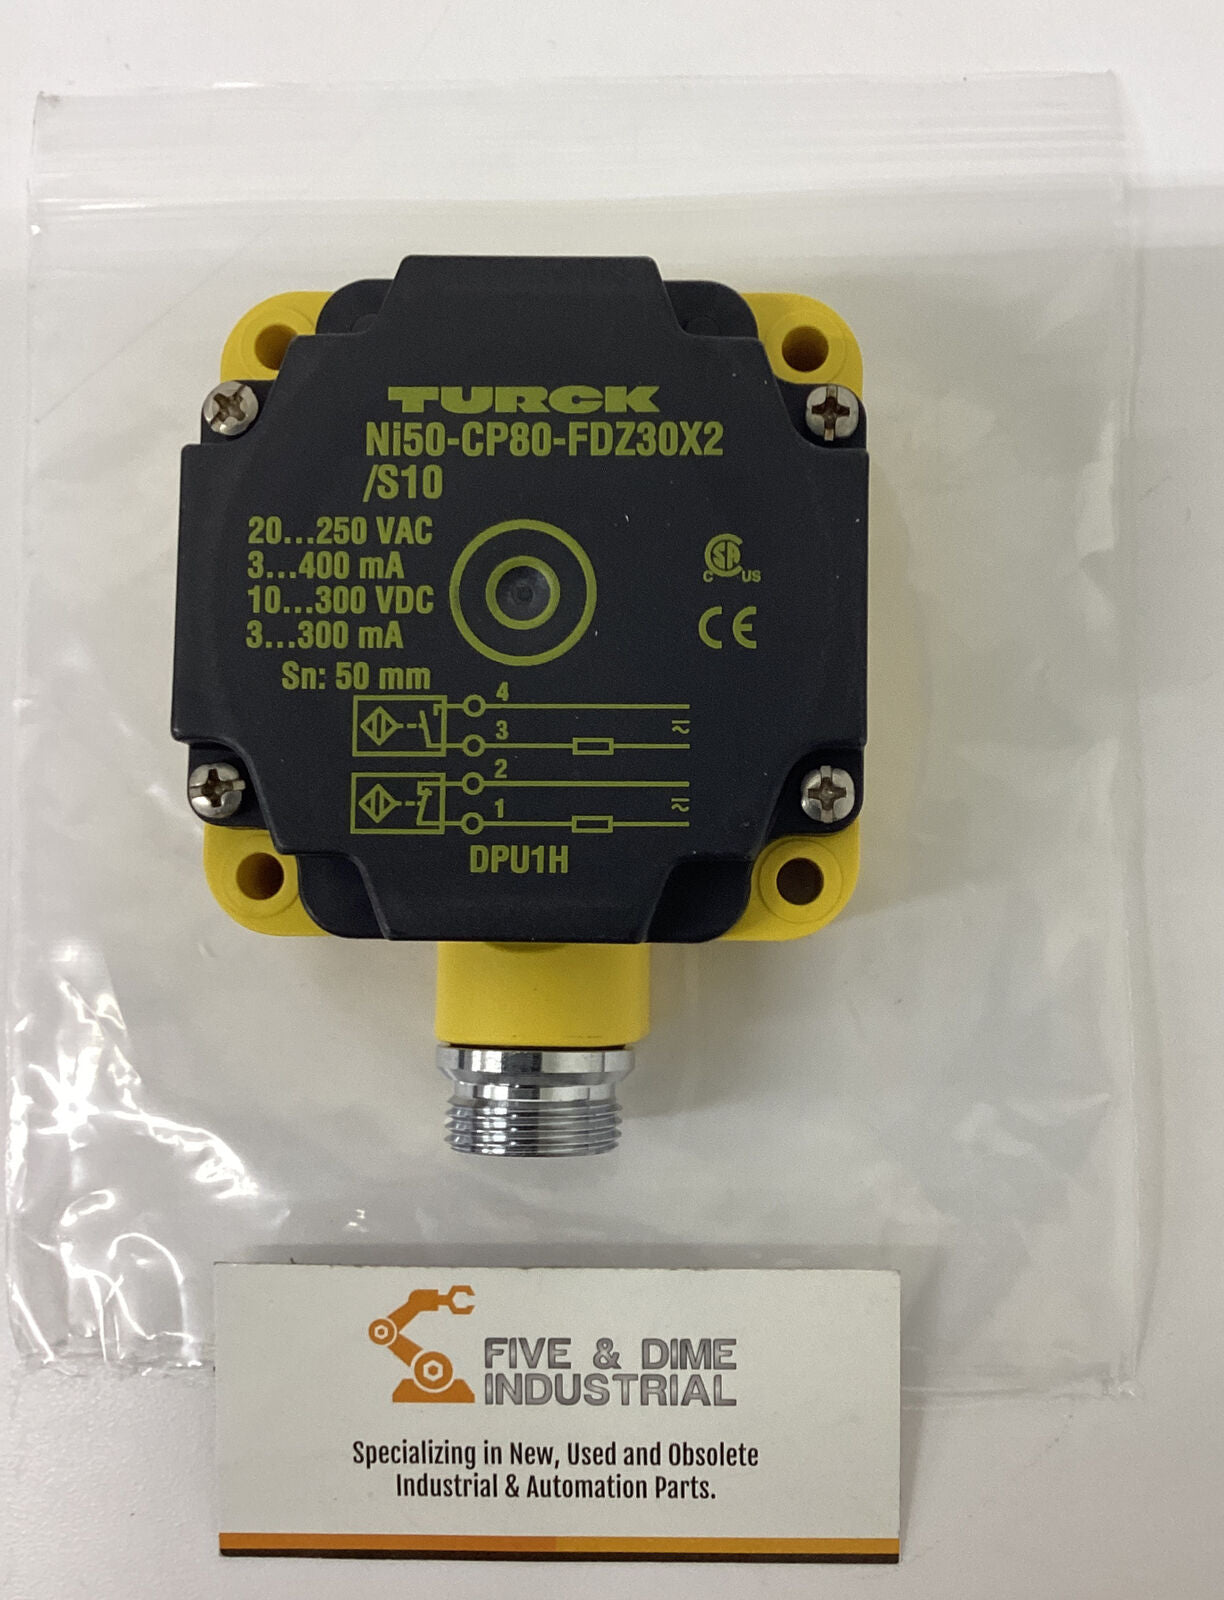 Turck Ni50-CP80-FDZ30X2/S10 Proximity Sensor (YE240)